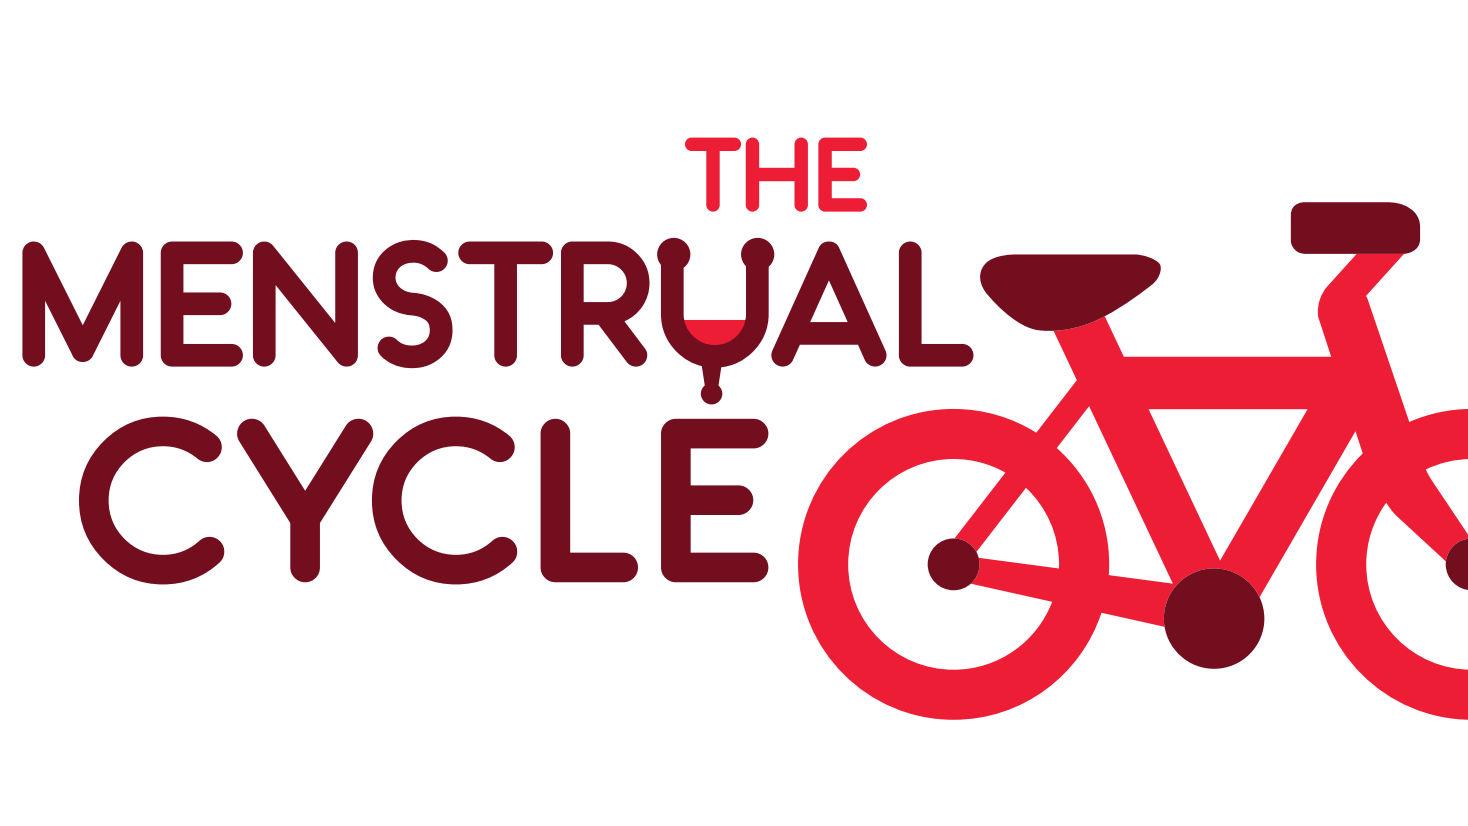 Menstrual cycle 2022